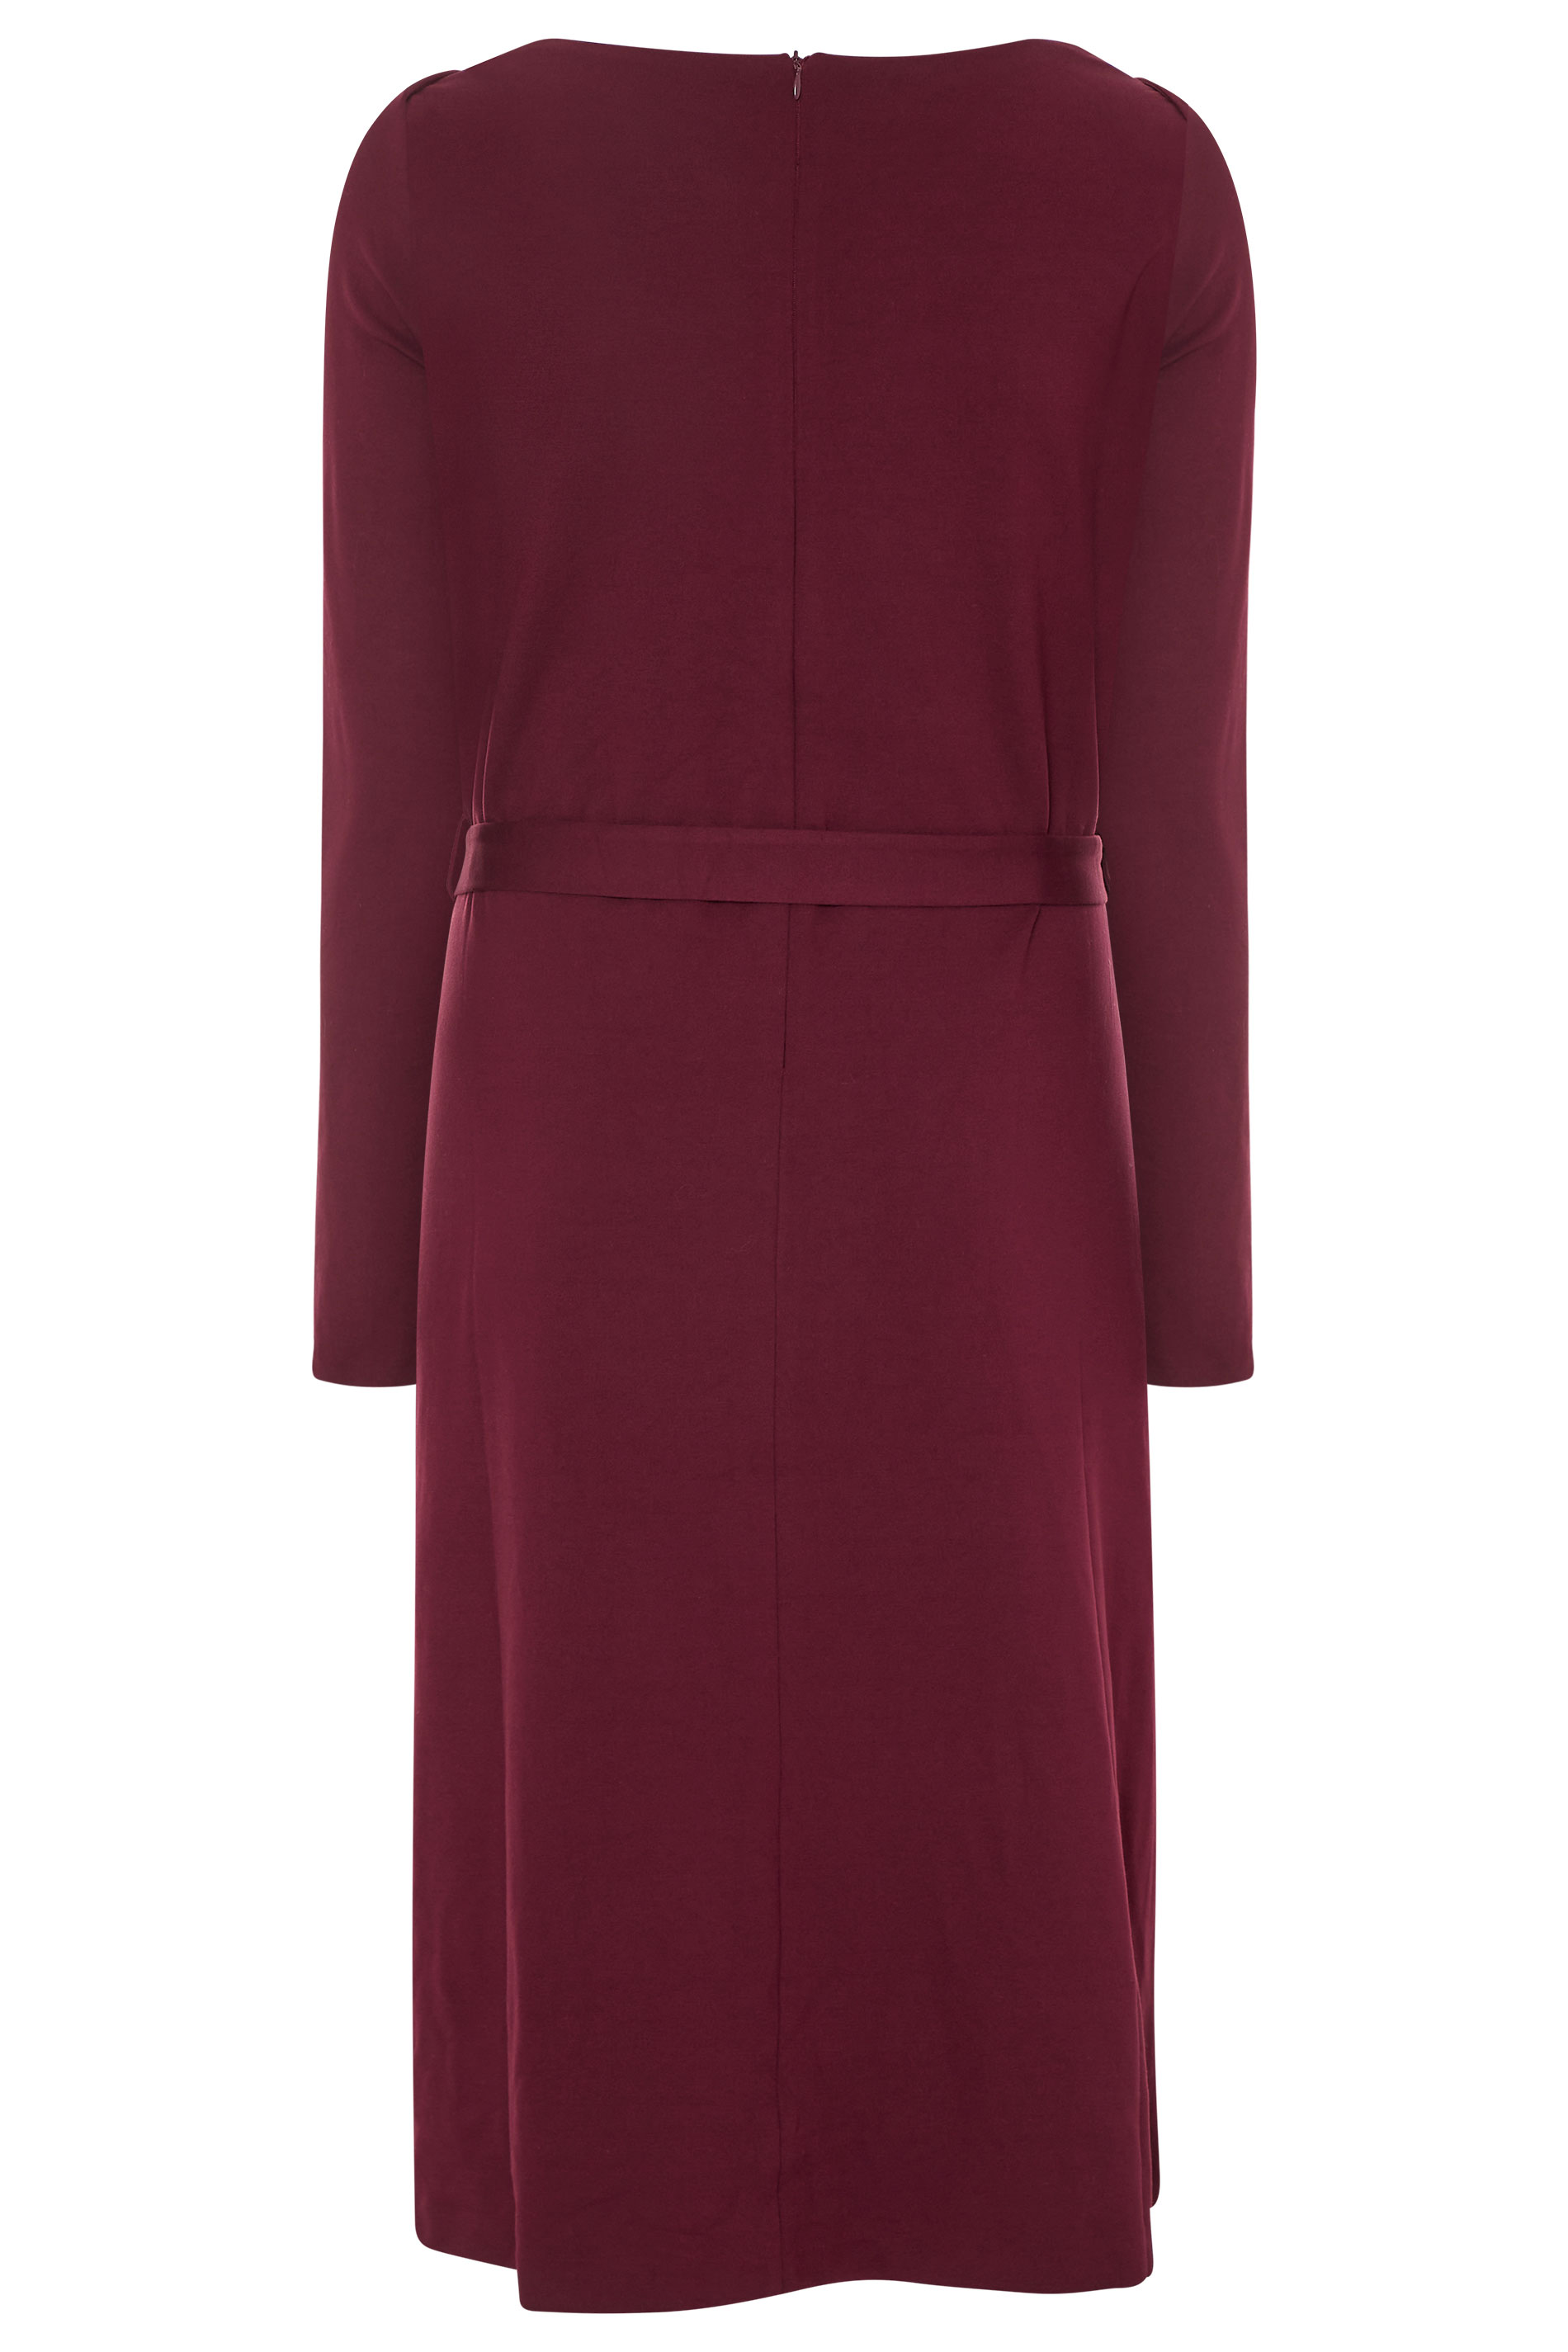 Burgundy Belted Jersey Dress | Long Tall Sally